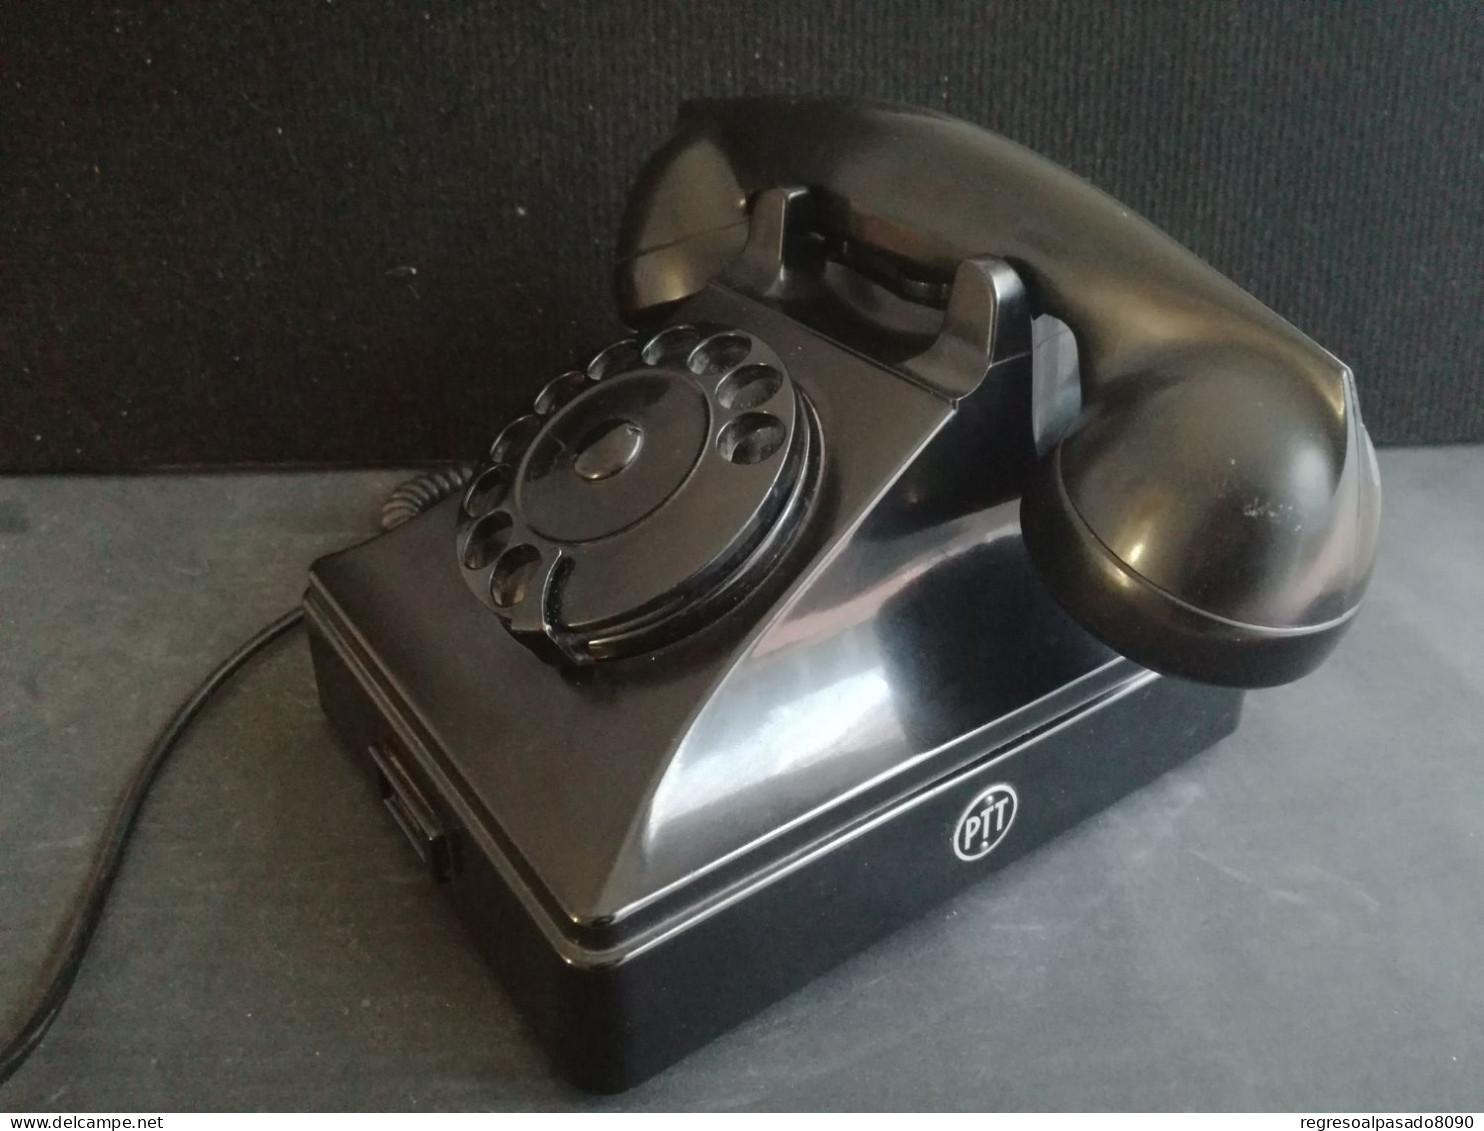 Teléfono Baquelita Negro De Los Años 60. Año 1963 Téléphone Telephone Phone - Telefoontechniek